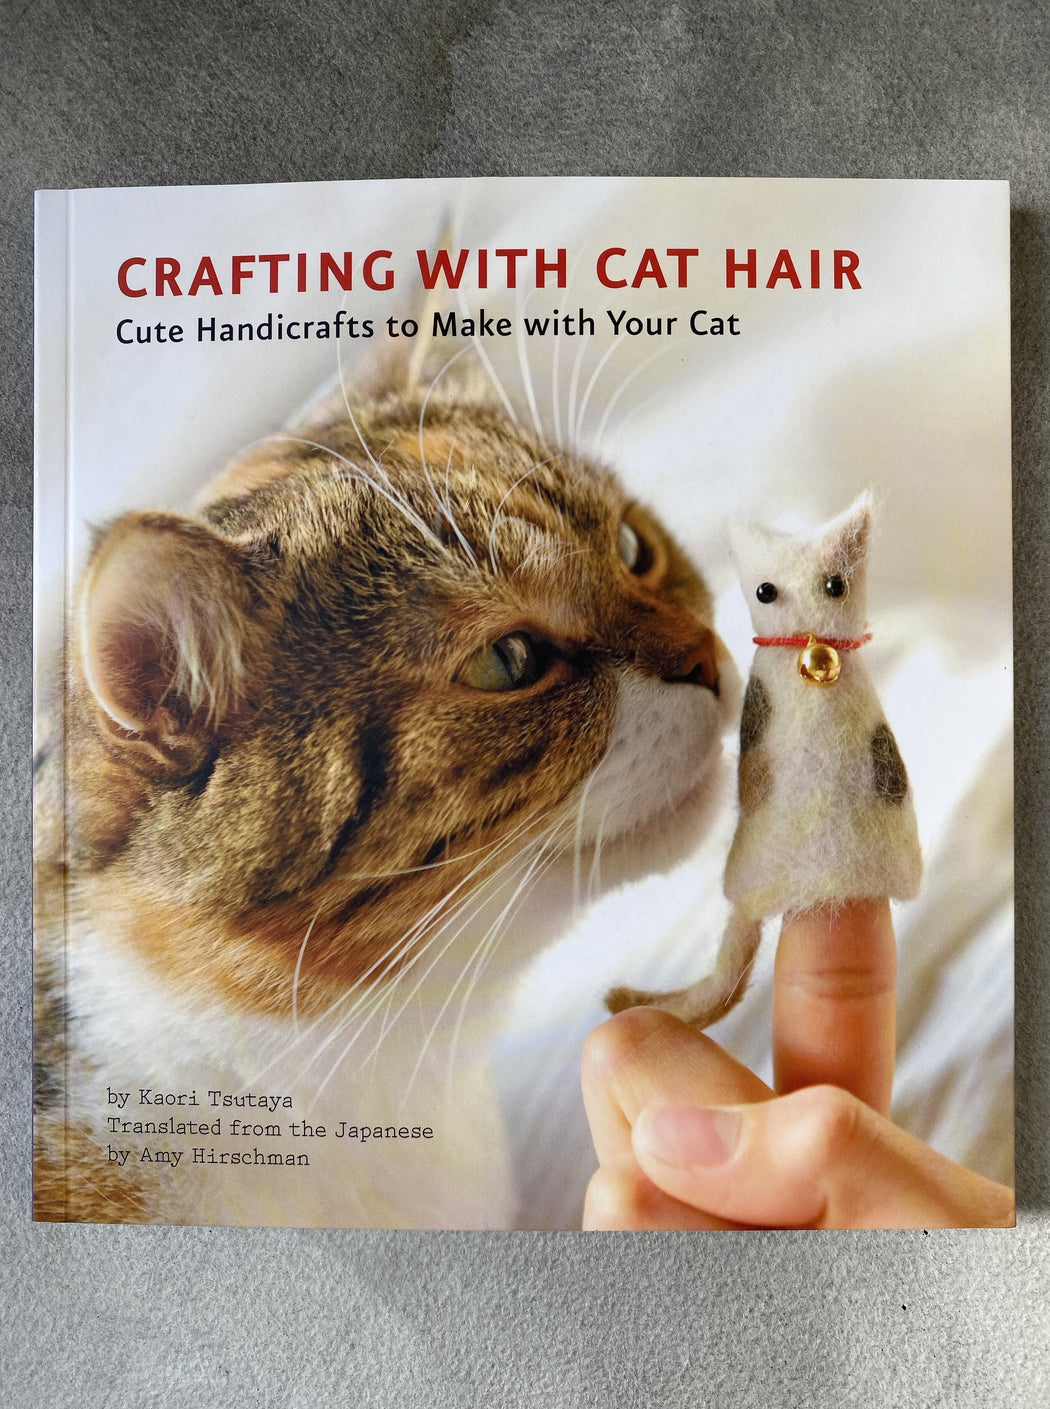 "Crafting With Cat Hair" by Kaori Tsutaya